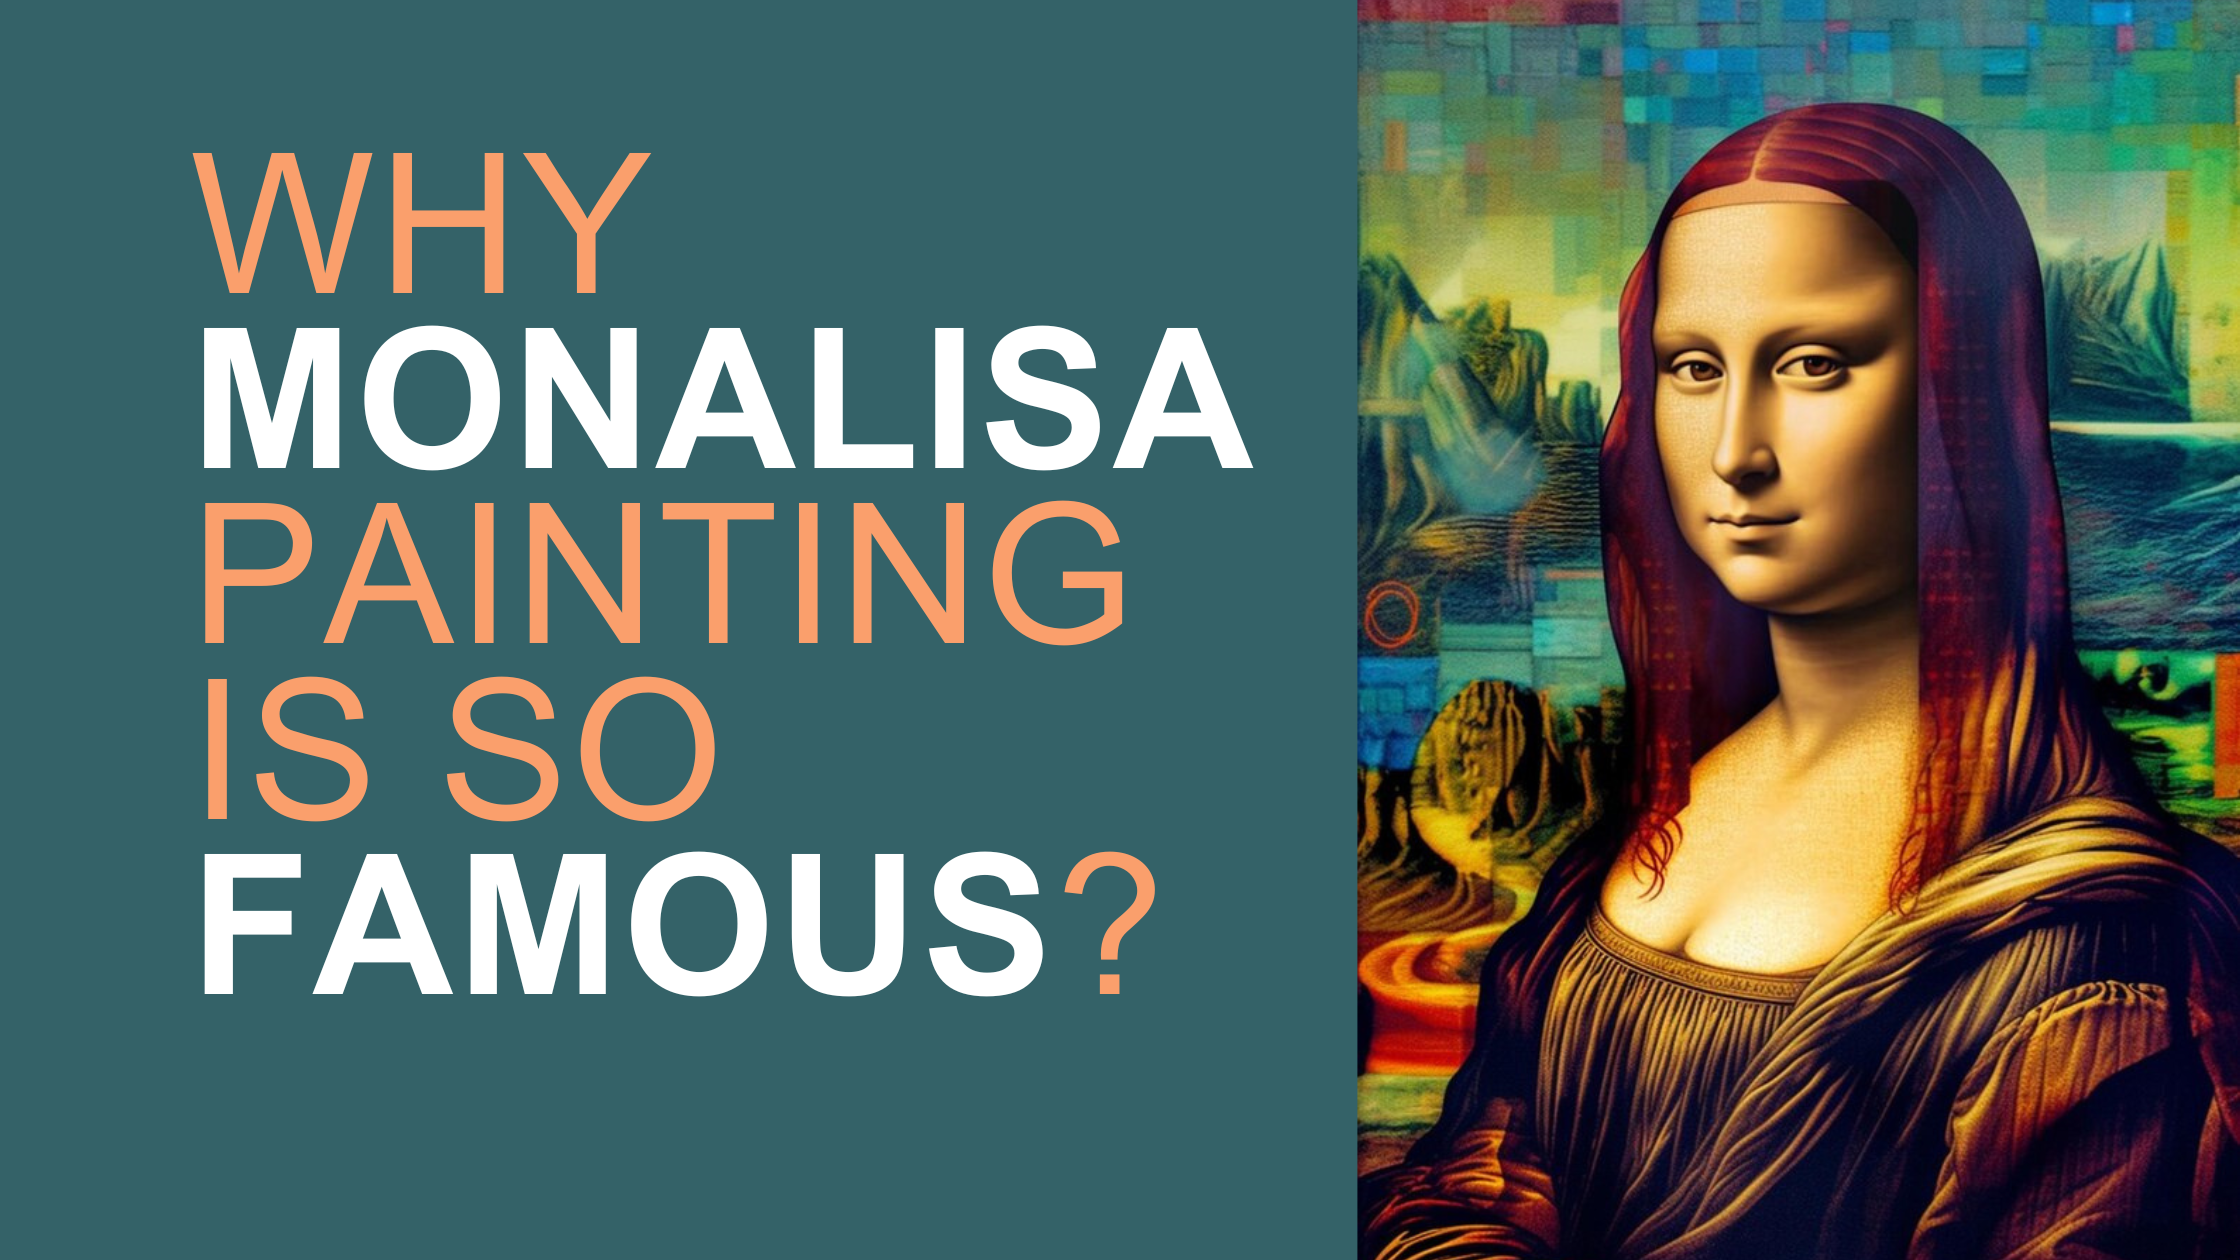 My Monalisa Painting  Famous art coloring, Renaissance paintings